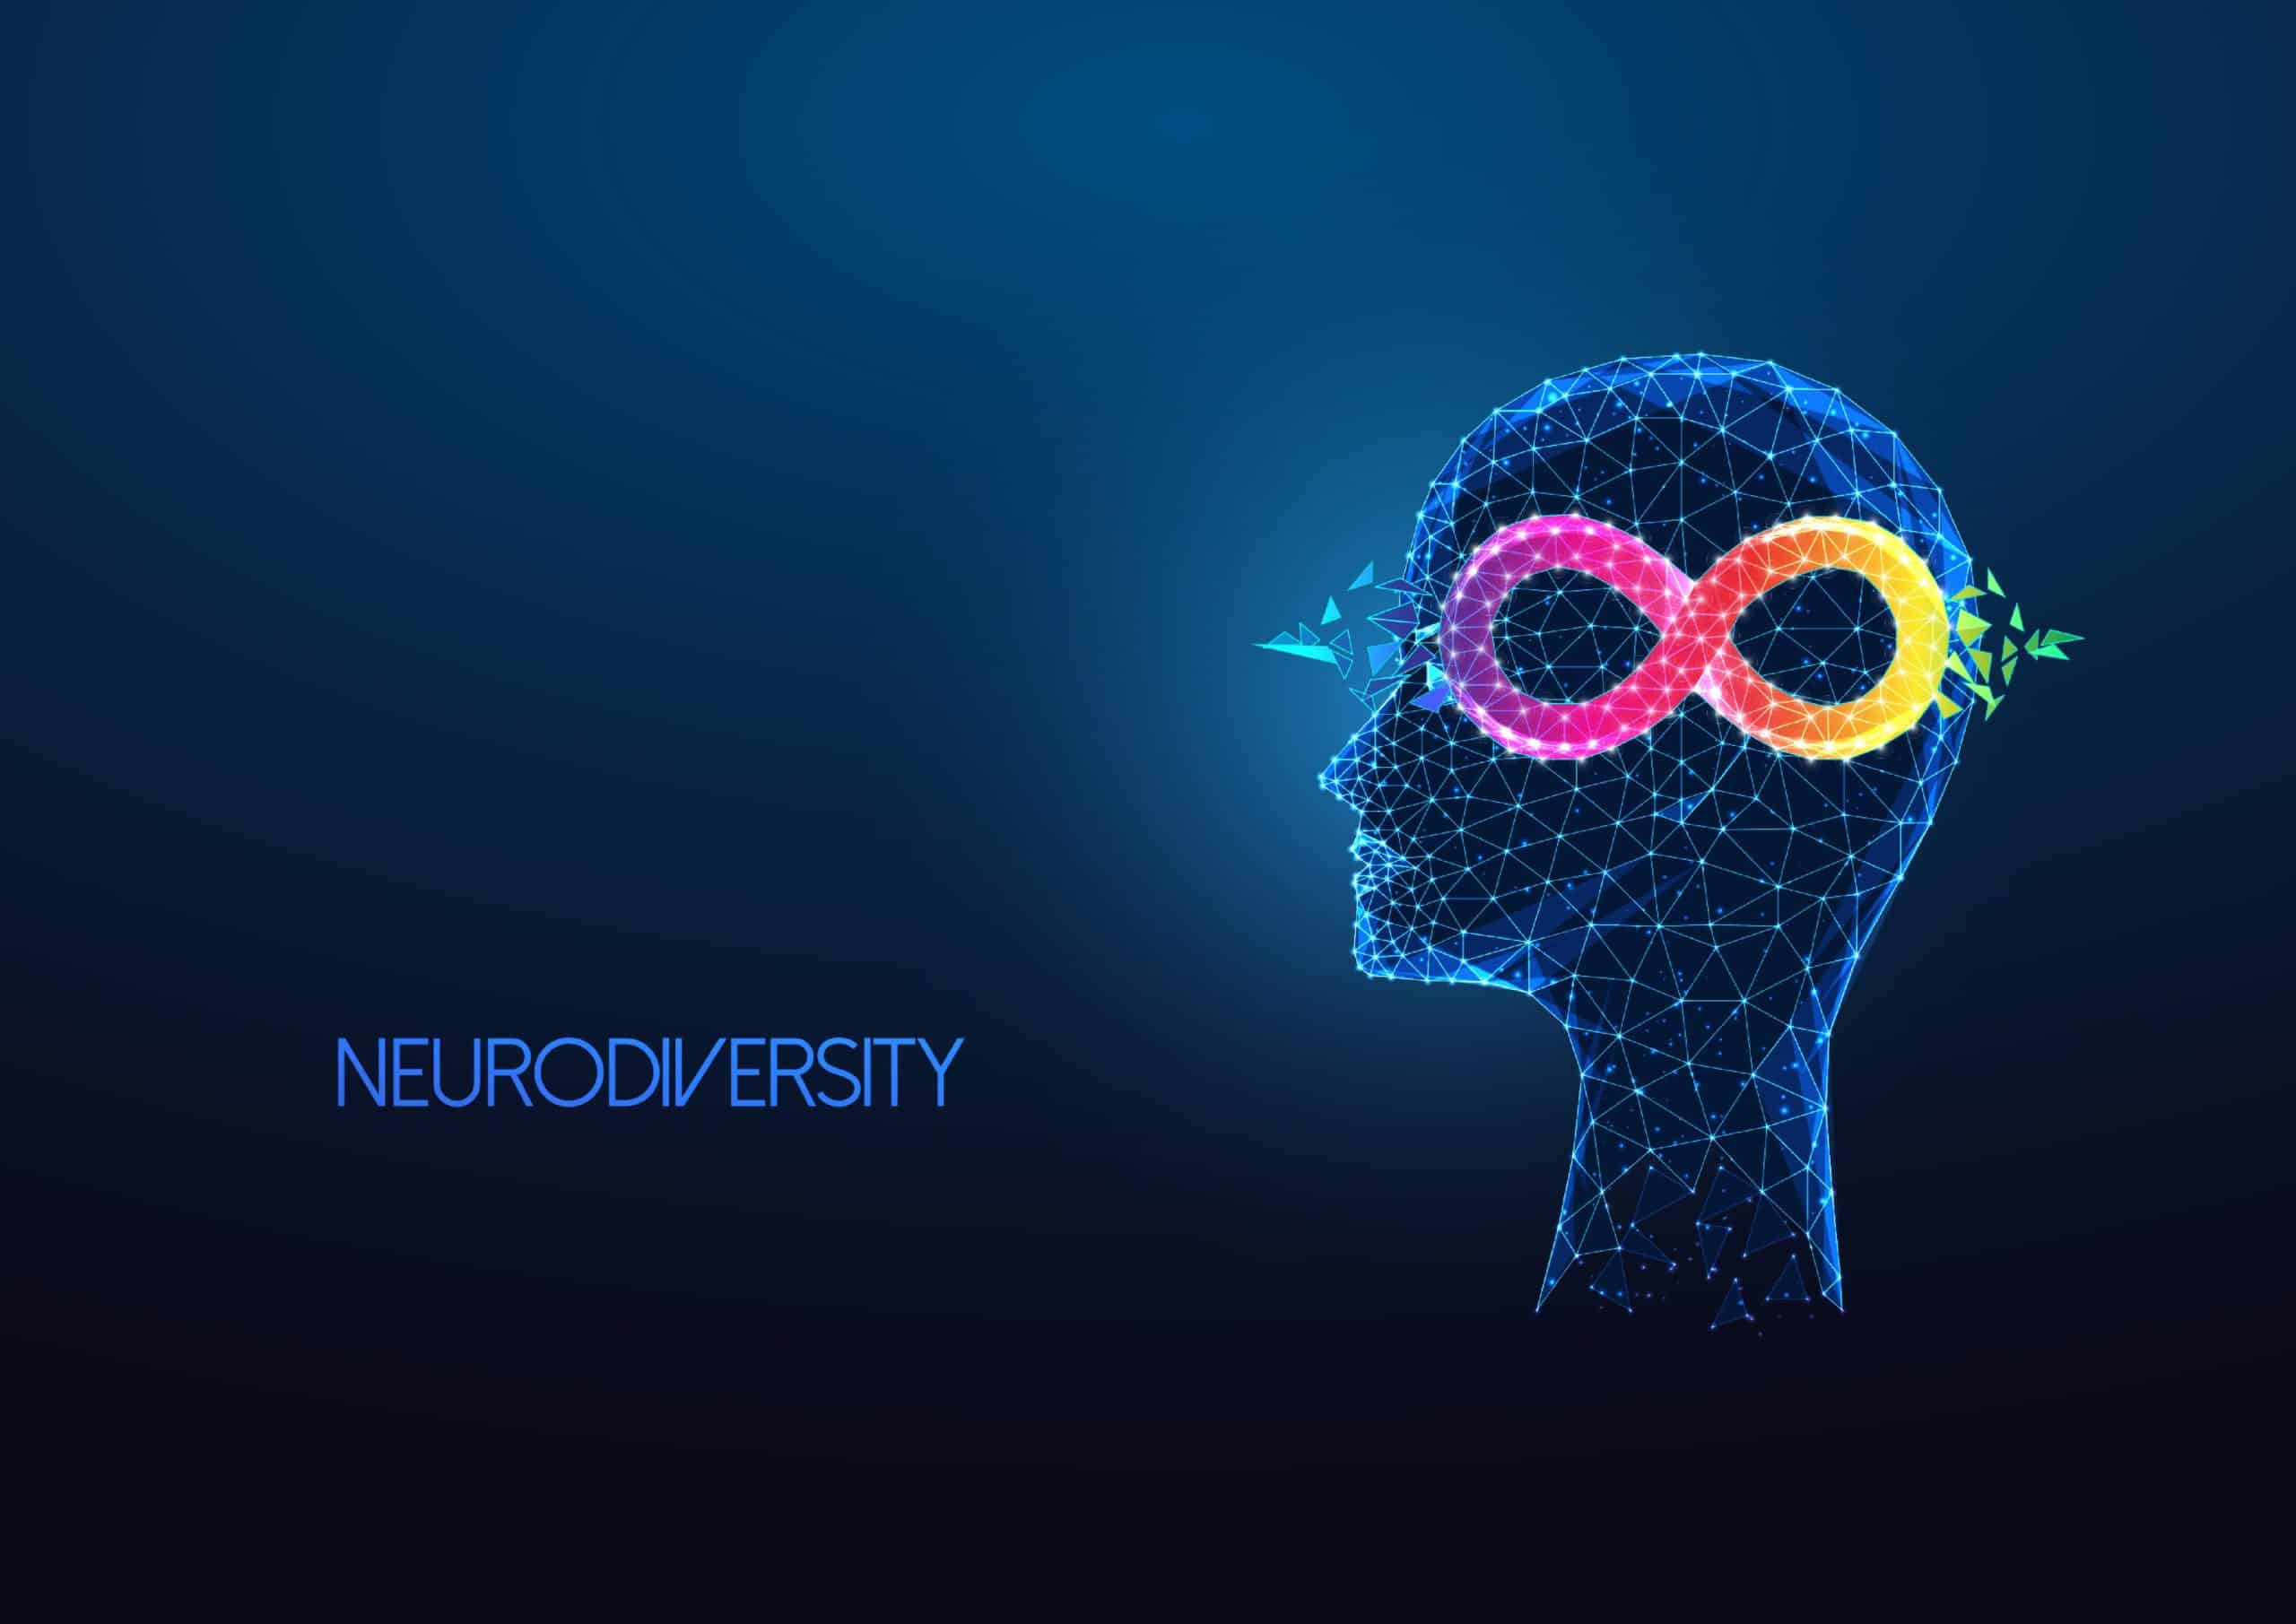 Human brain with neurodiversity logo